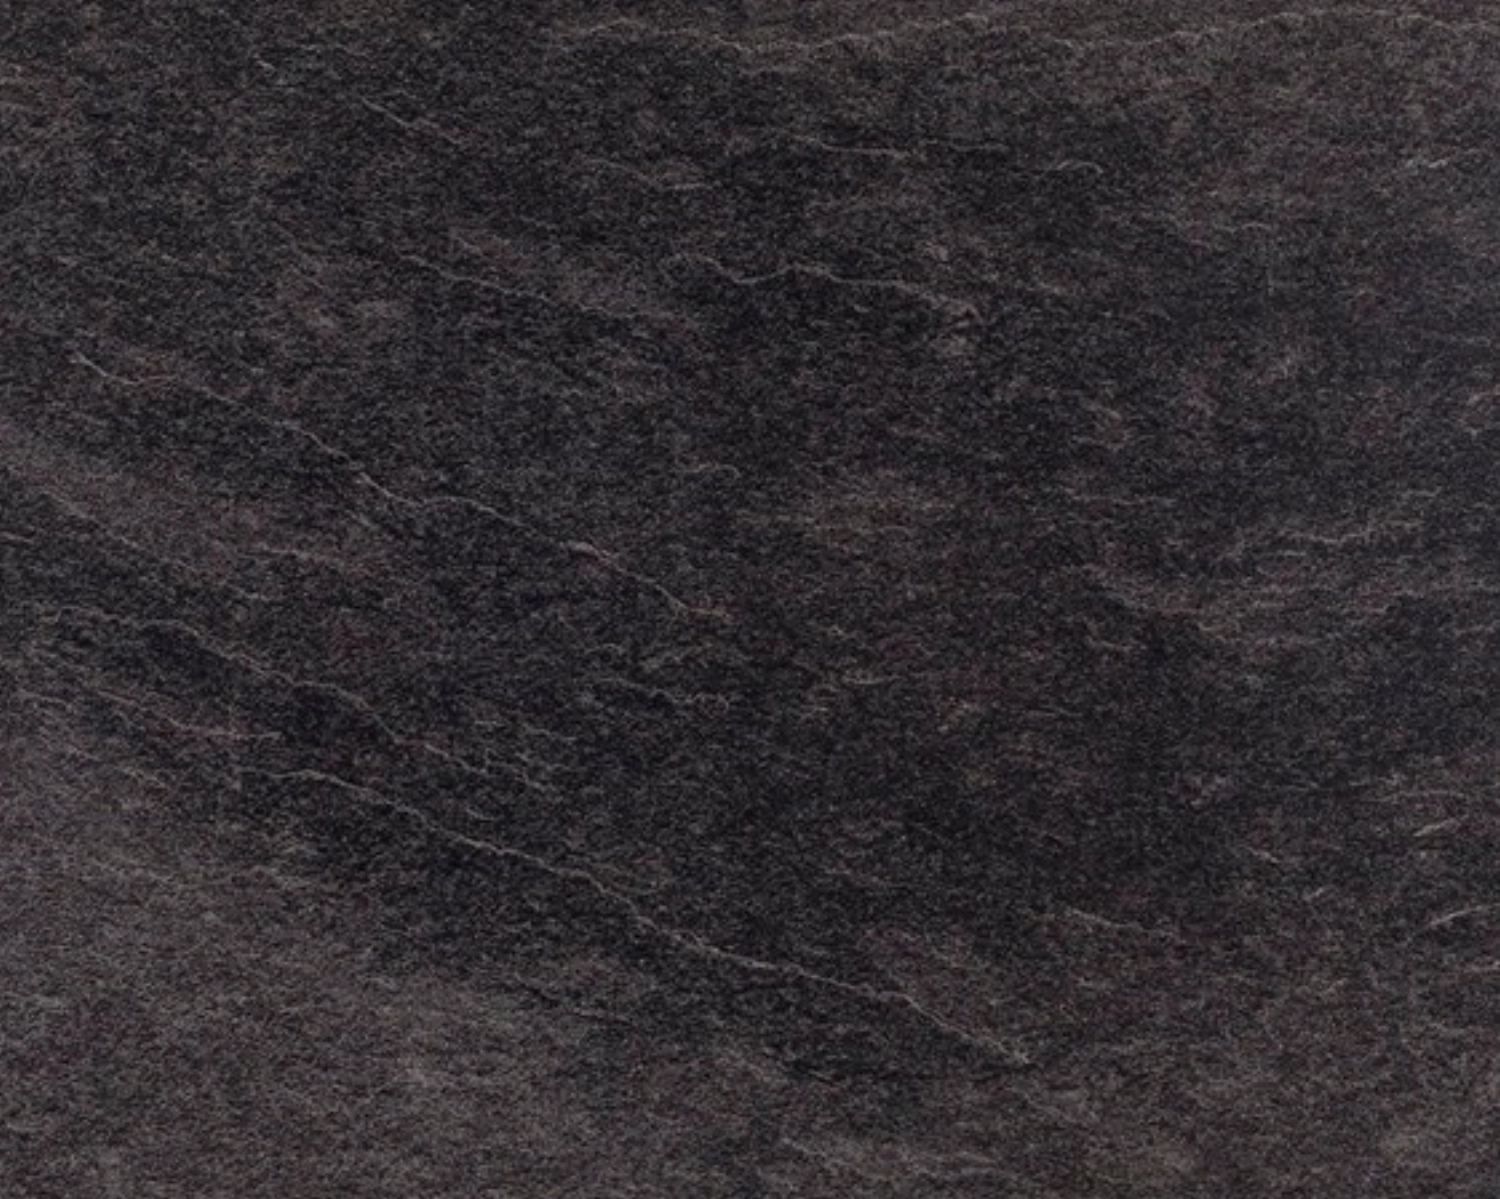 Tablett Euronorm 1/2 Dark Marble 37x26.5cm